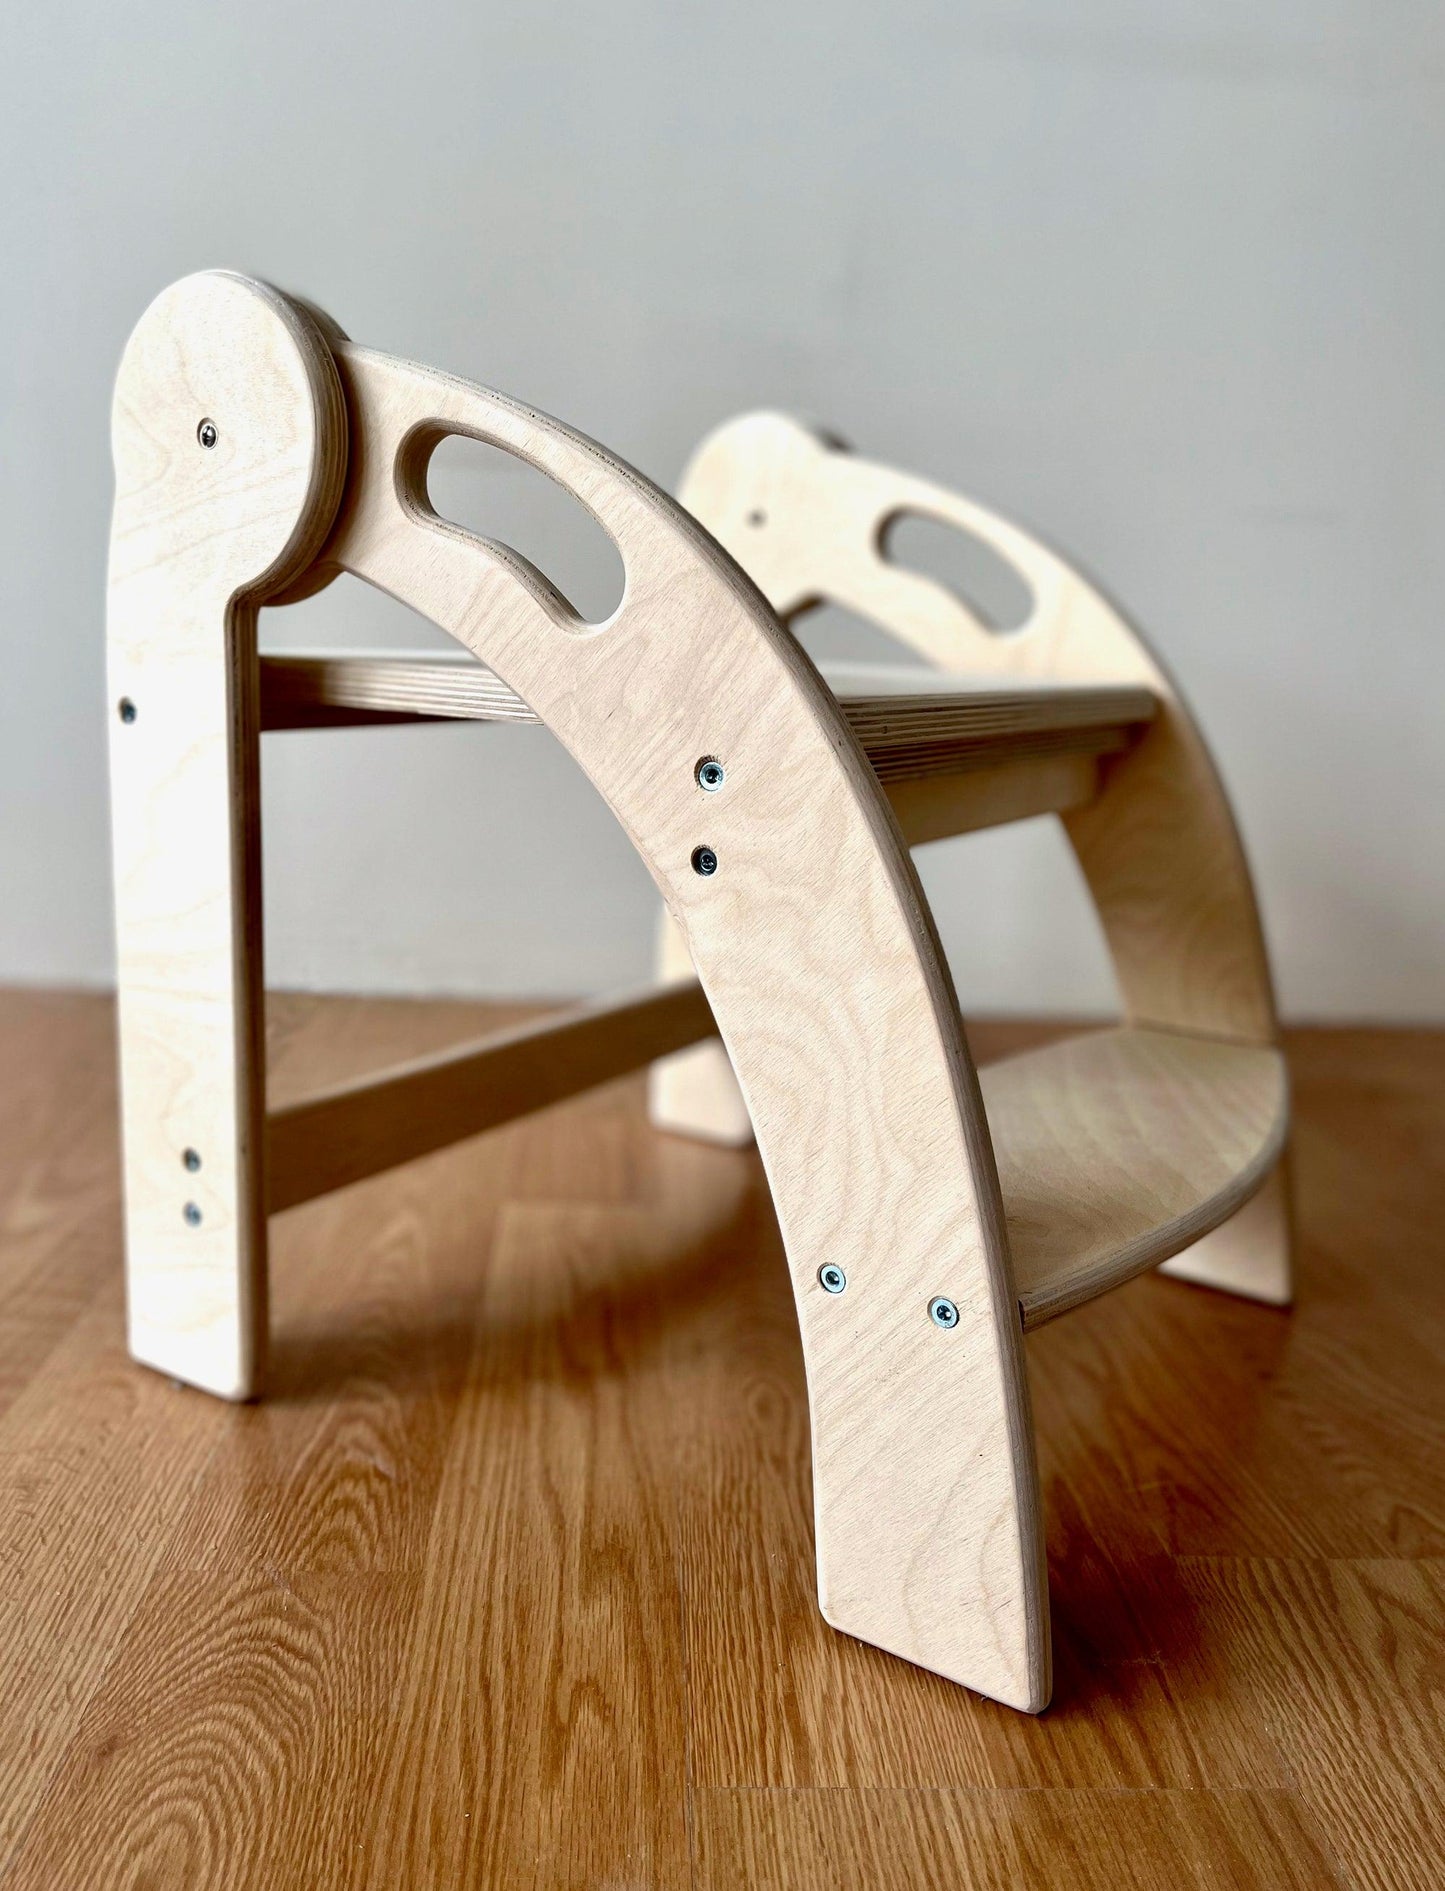 Foldable Montessori Two-Step Wooden Kitchen Helper Stool